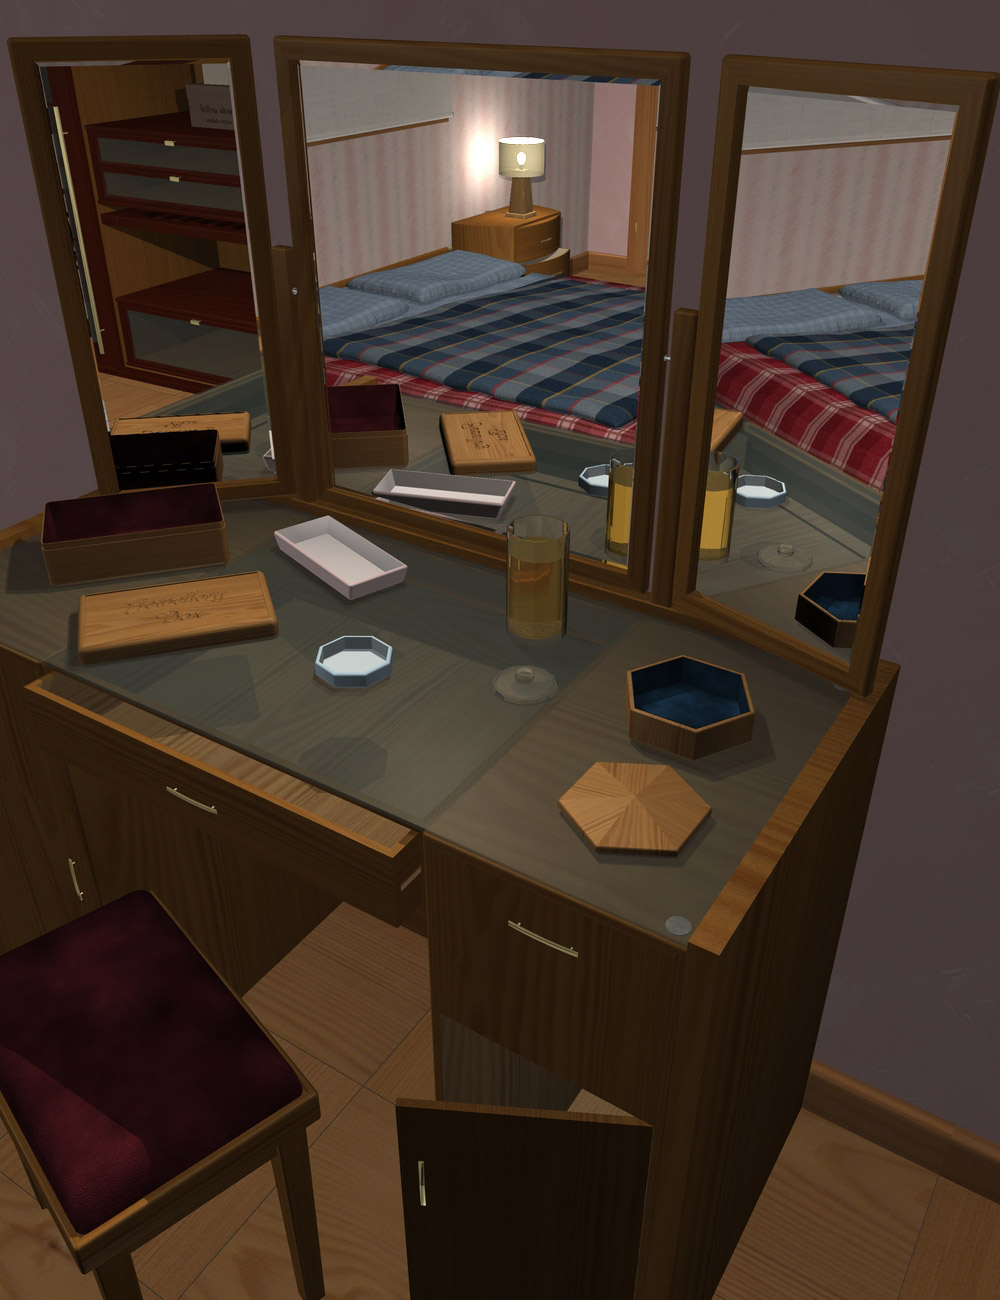 Home One Bedroom by: maclean, 3D Models by Daz 3D